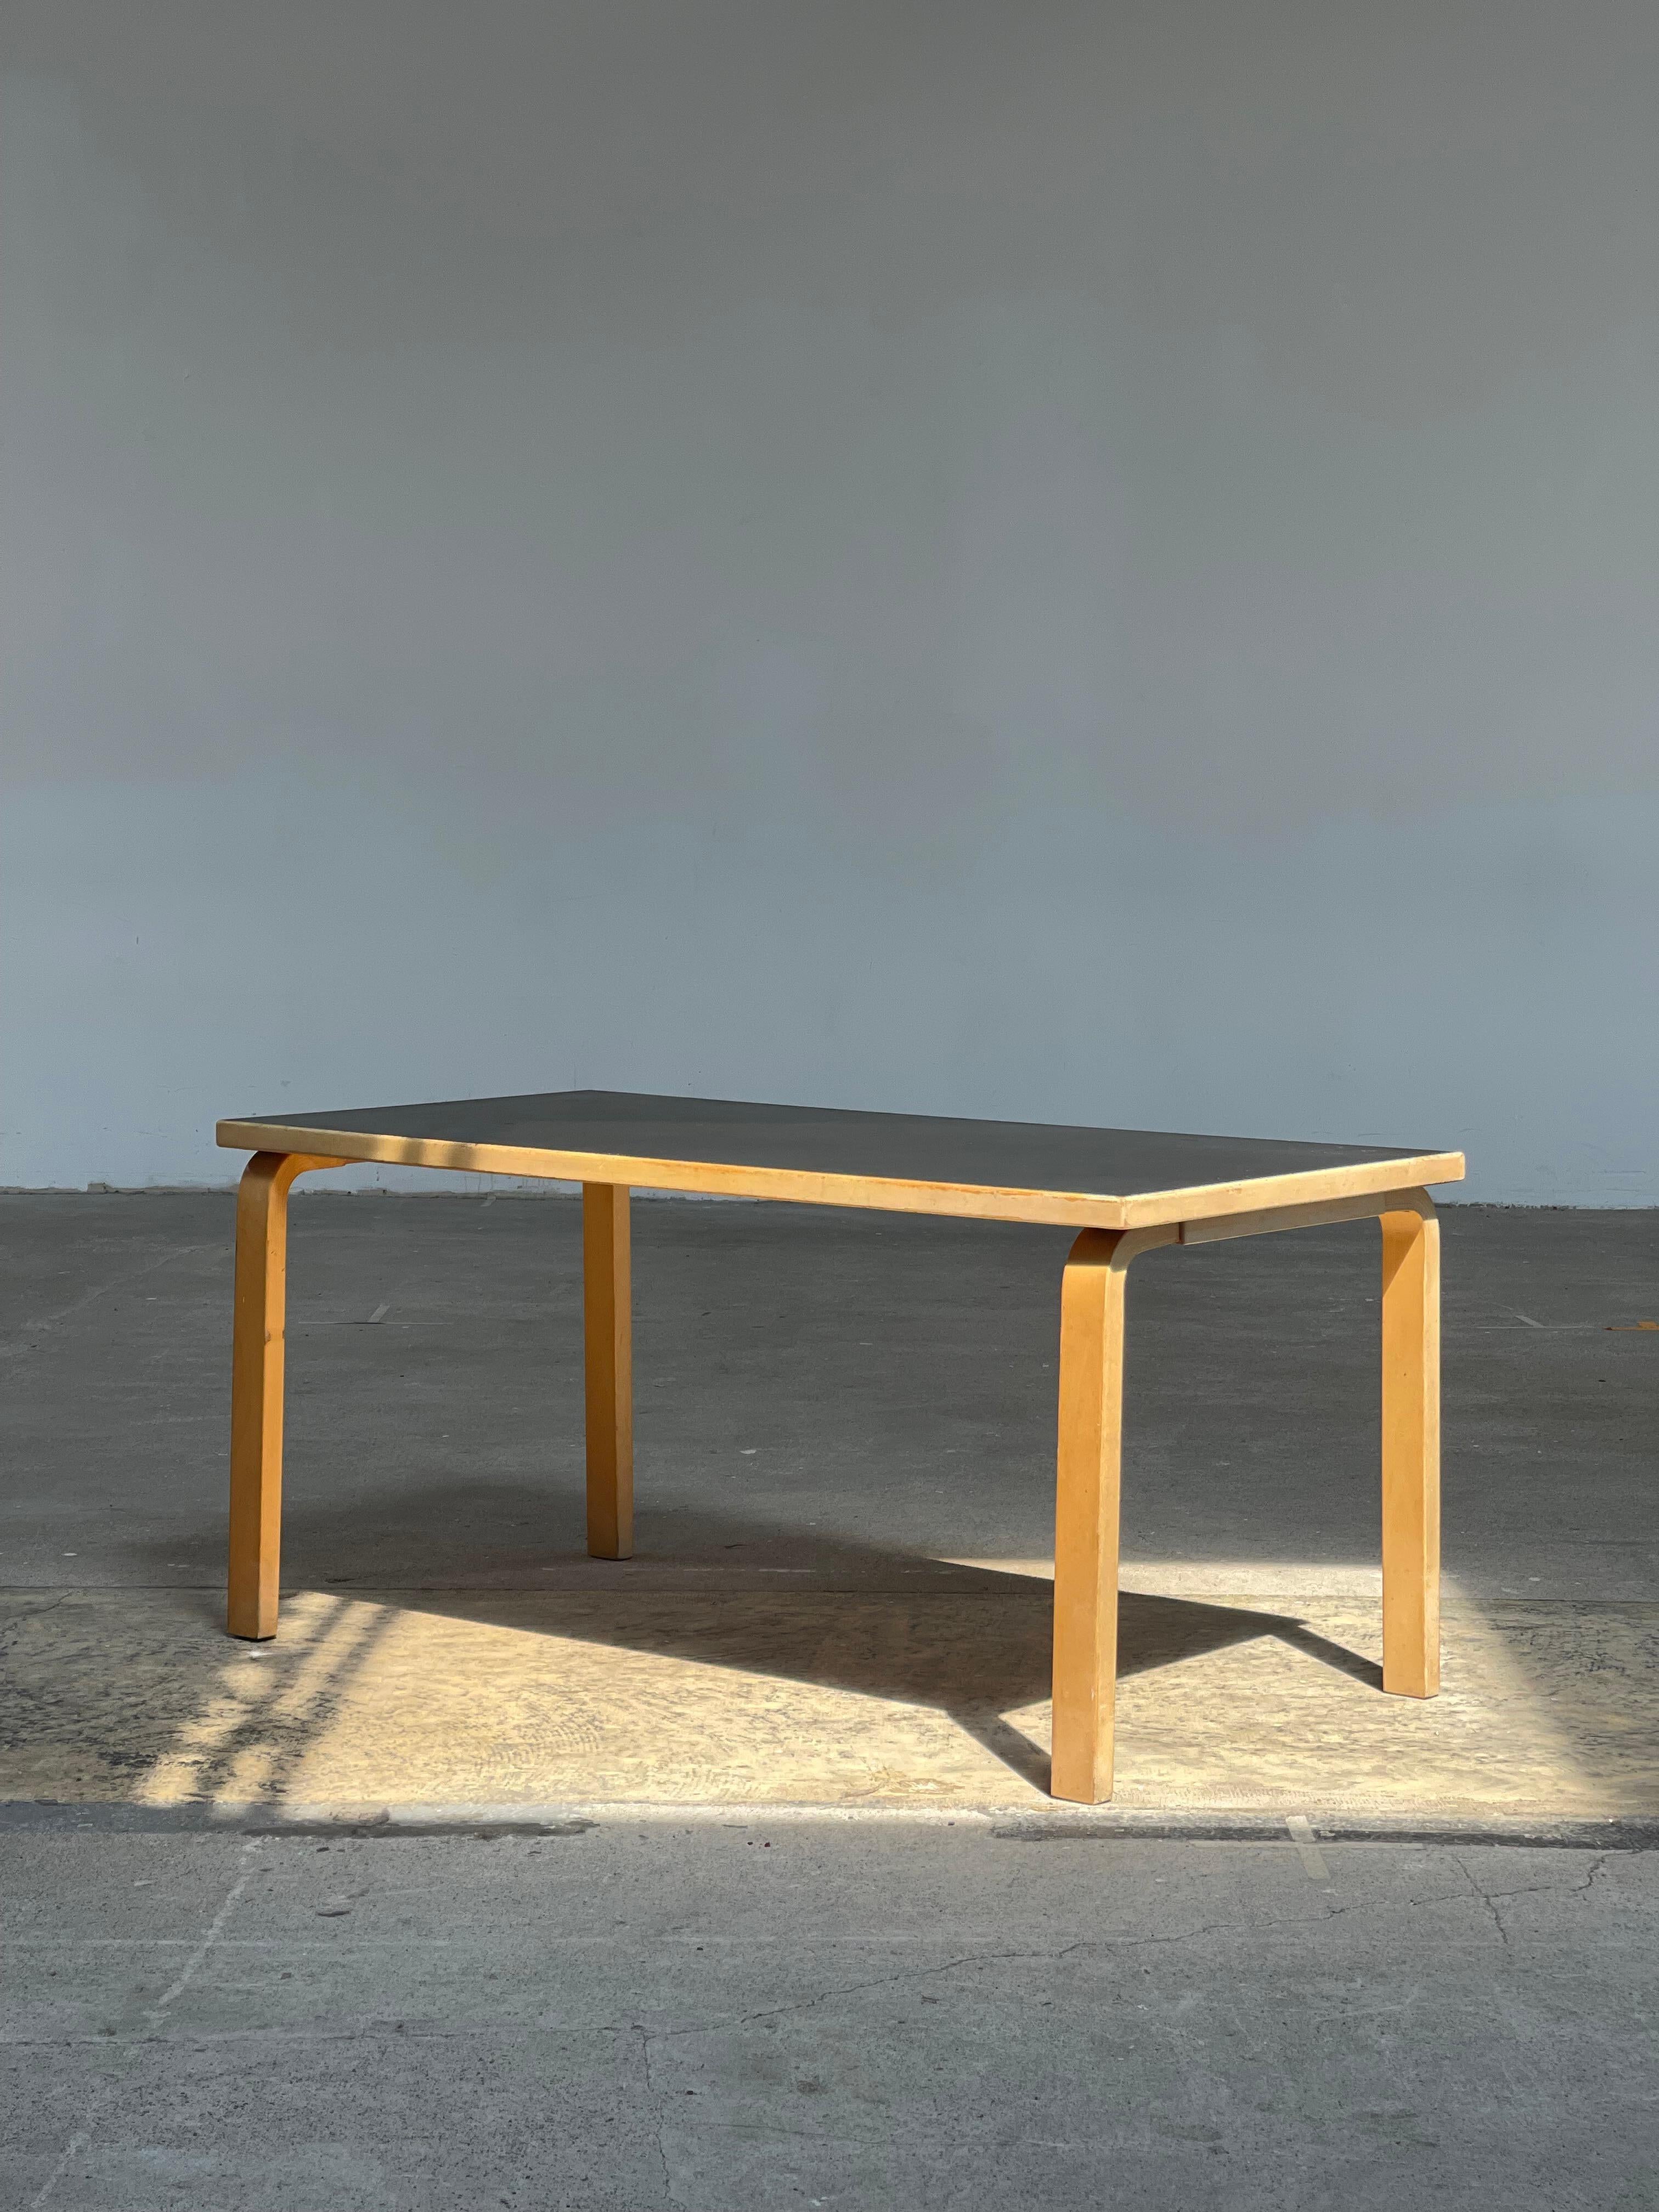 Finnish Alvar Aalto For Artek Dining Table + Chairs